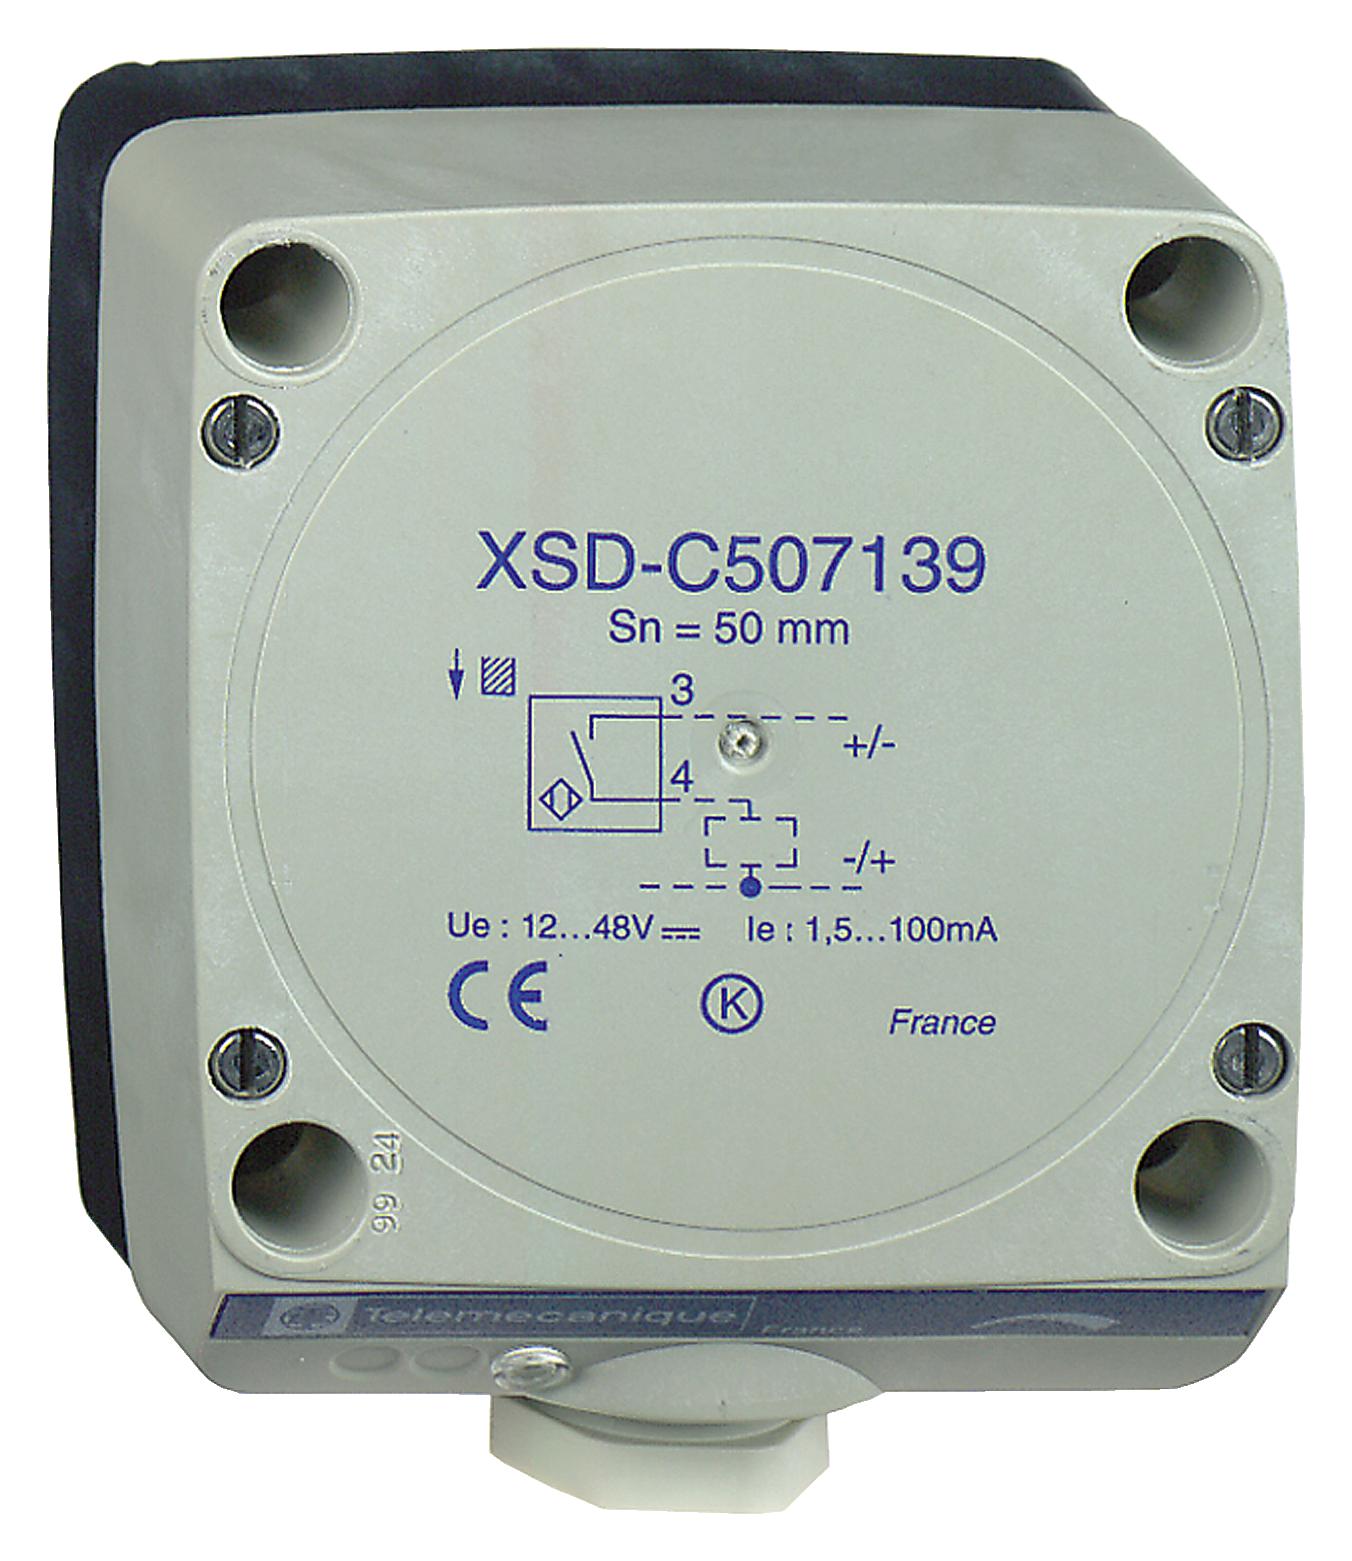 SCHNEIDER ELECTRIC Inductive XSDC407138 INDUCTIVE PROXIMITY SENSOR, 40MM, 48V SCHNEIDER ELECTRIC 3113848 XSDC407138